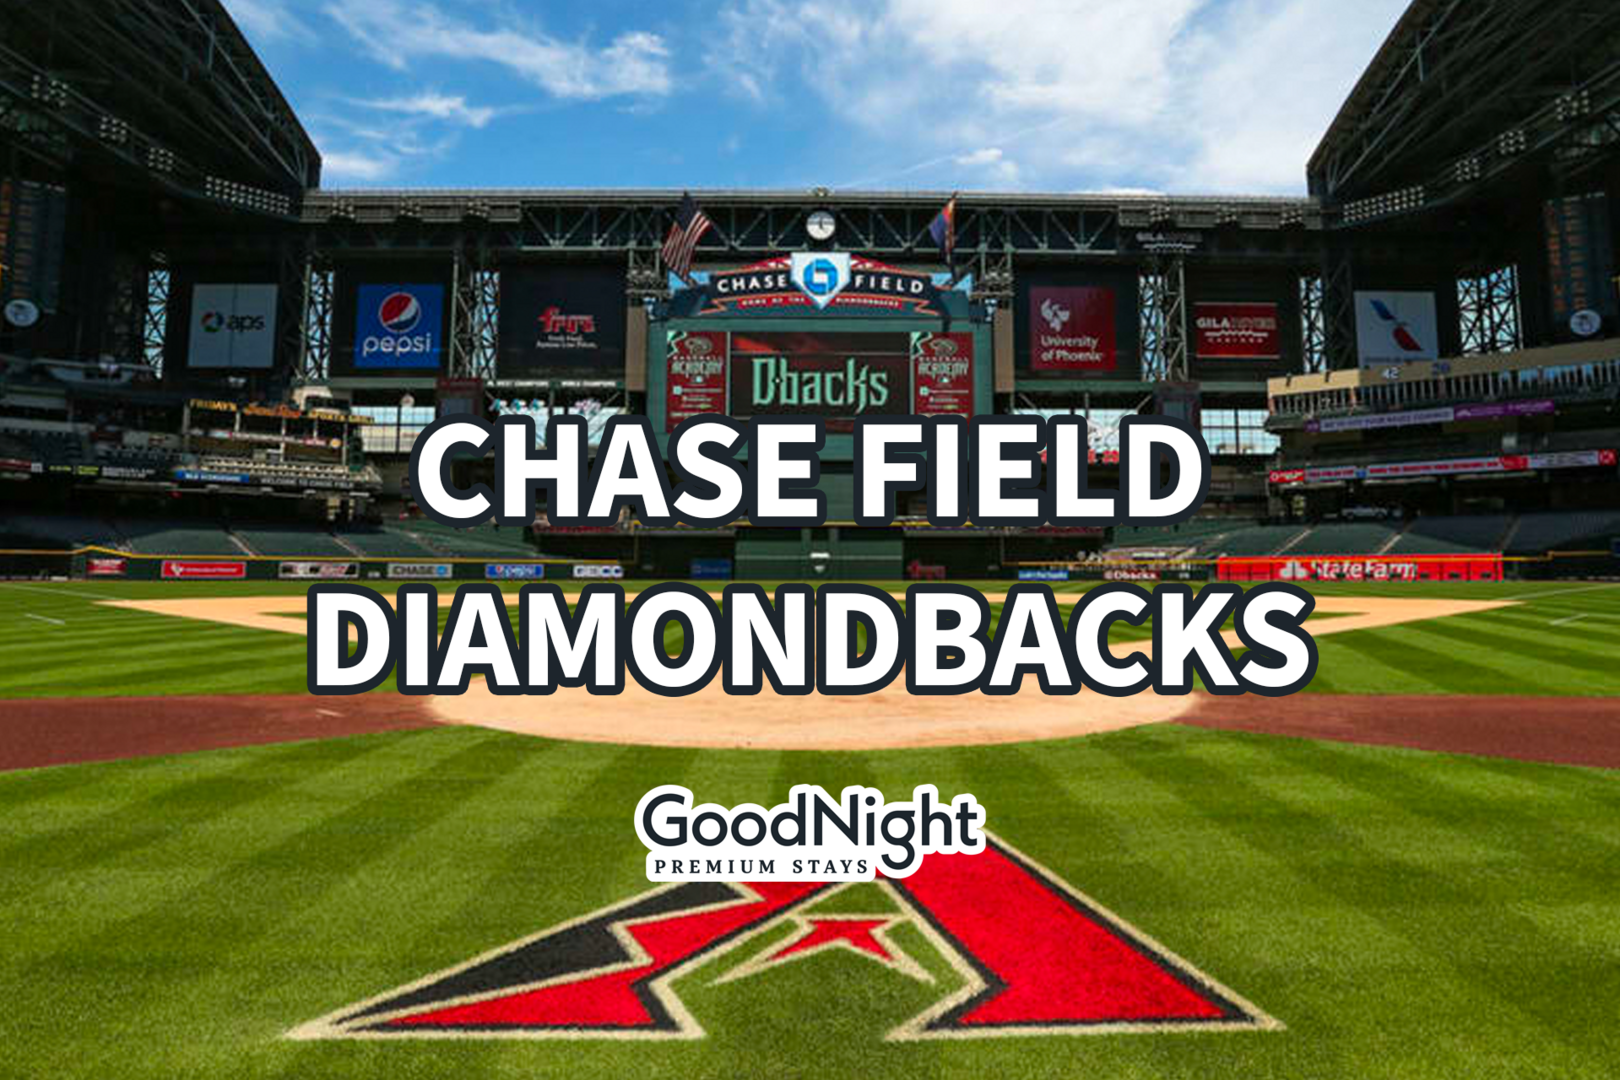 40 mins to Chase Field - Home to the AZ Diamondbacks